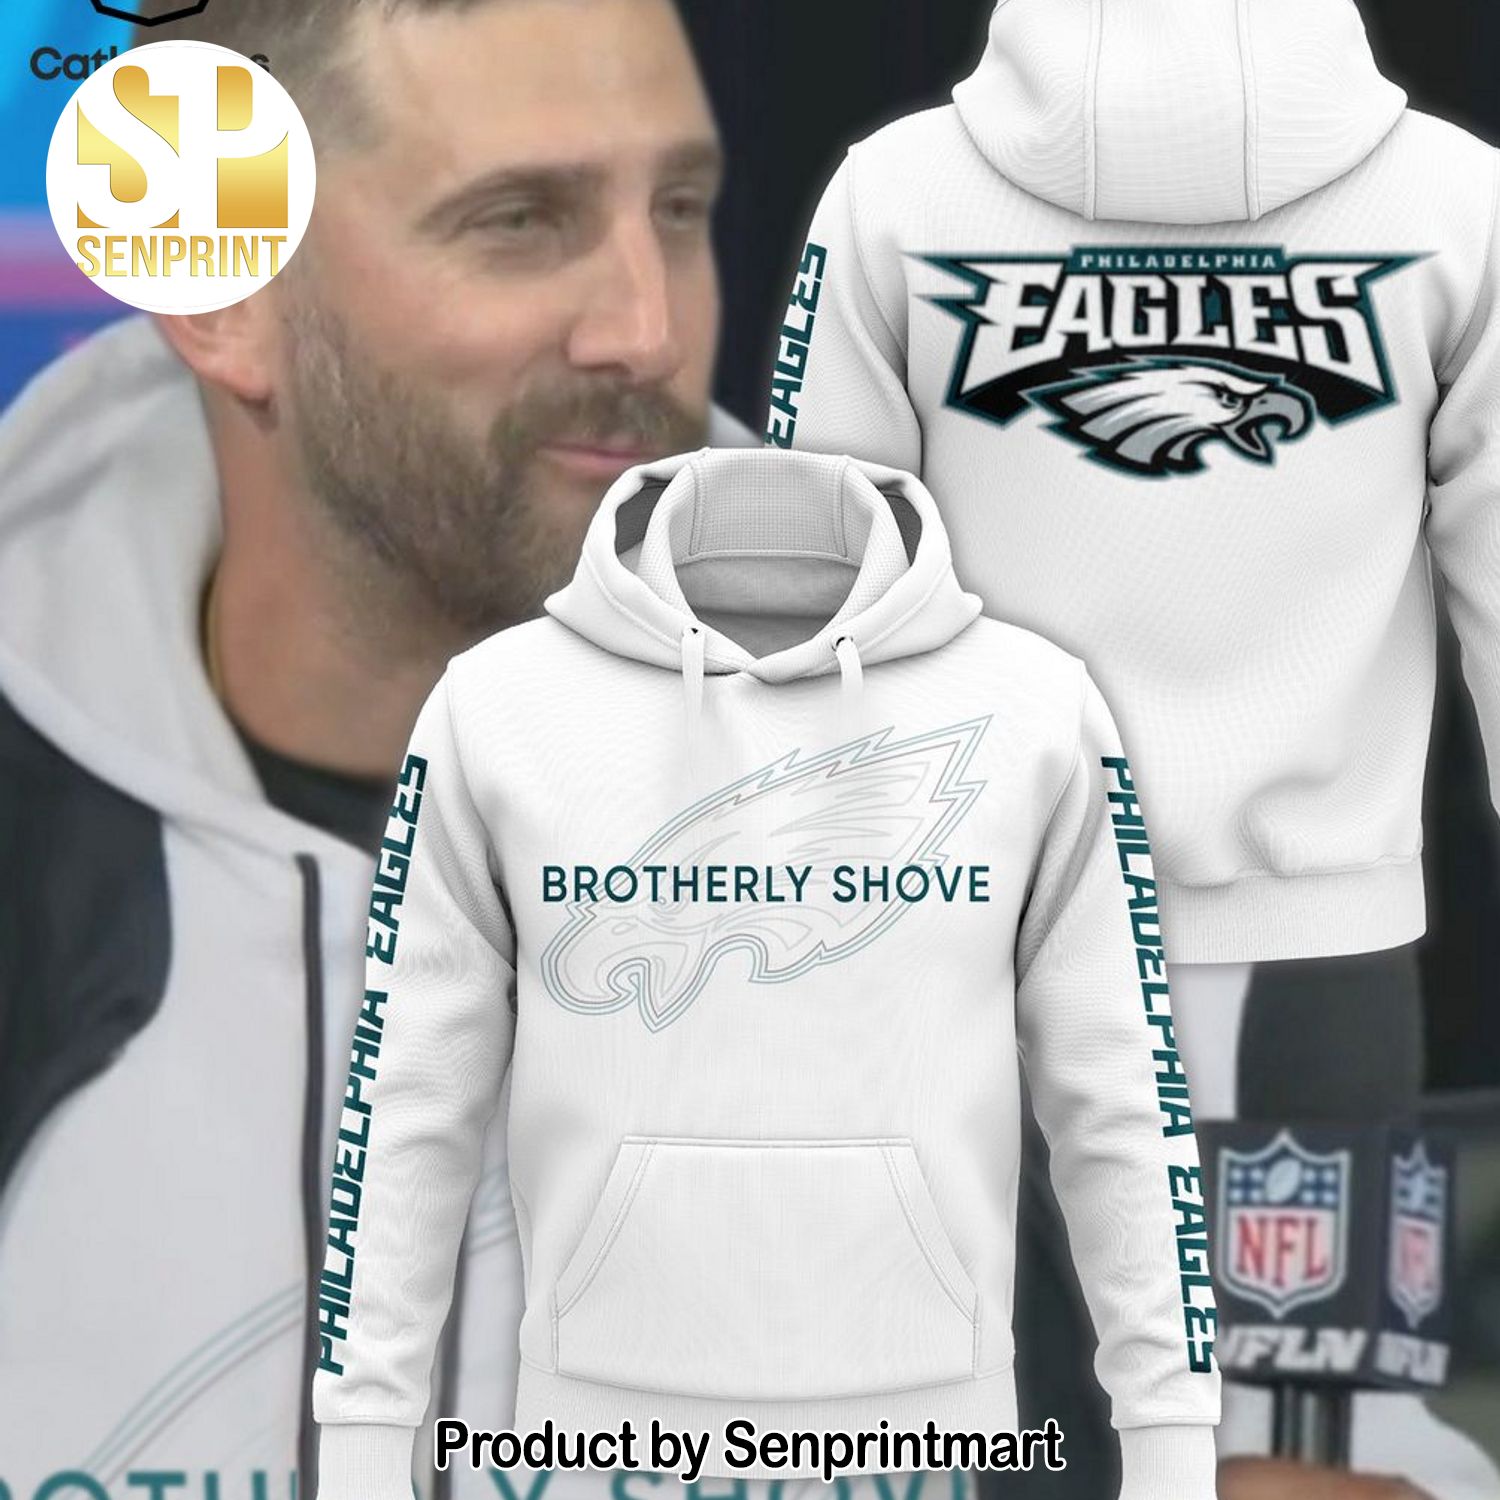 Philadelphia Eagles Brotherly Shove Logo Design Full Printed Shirt